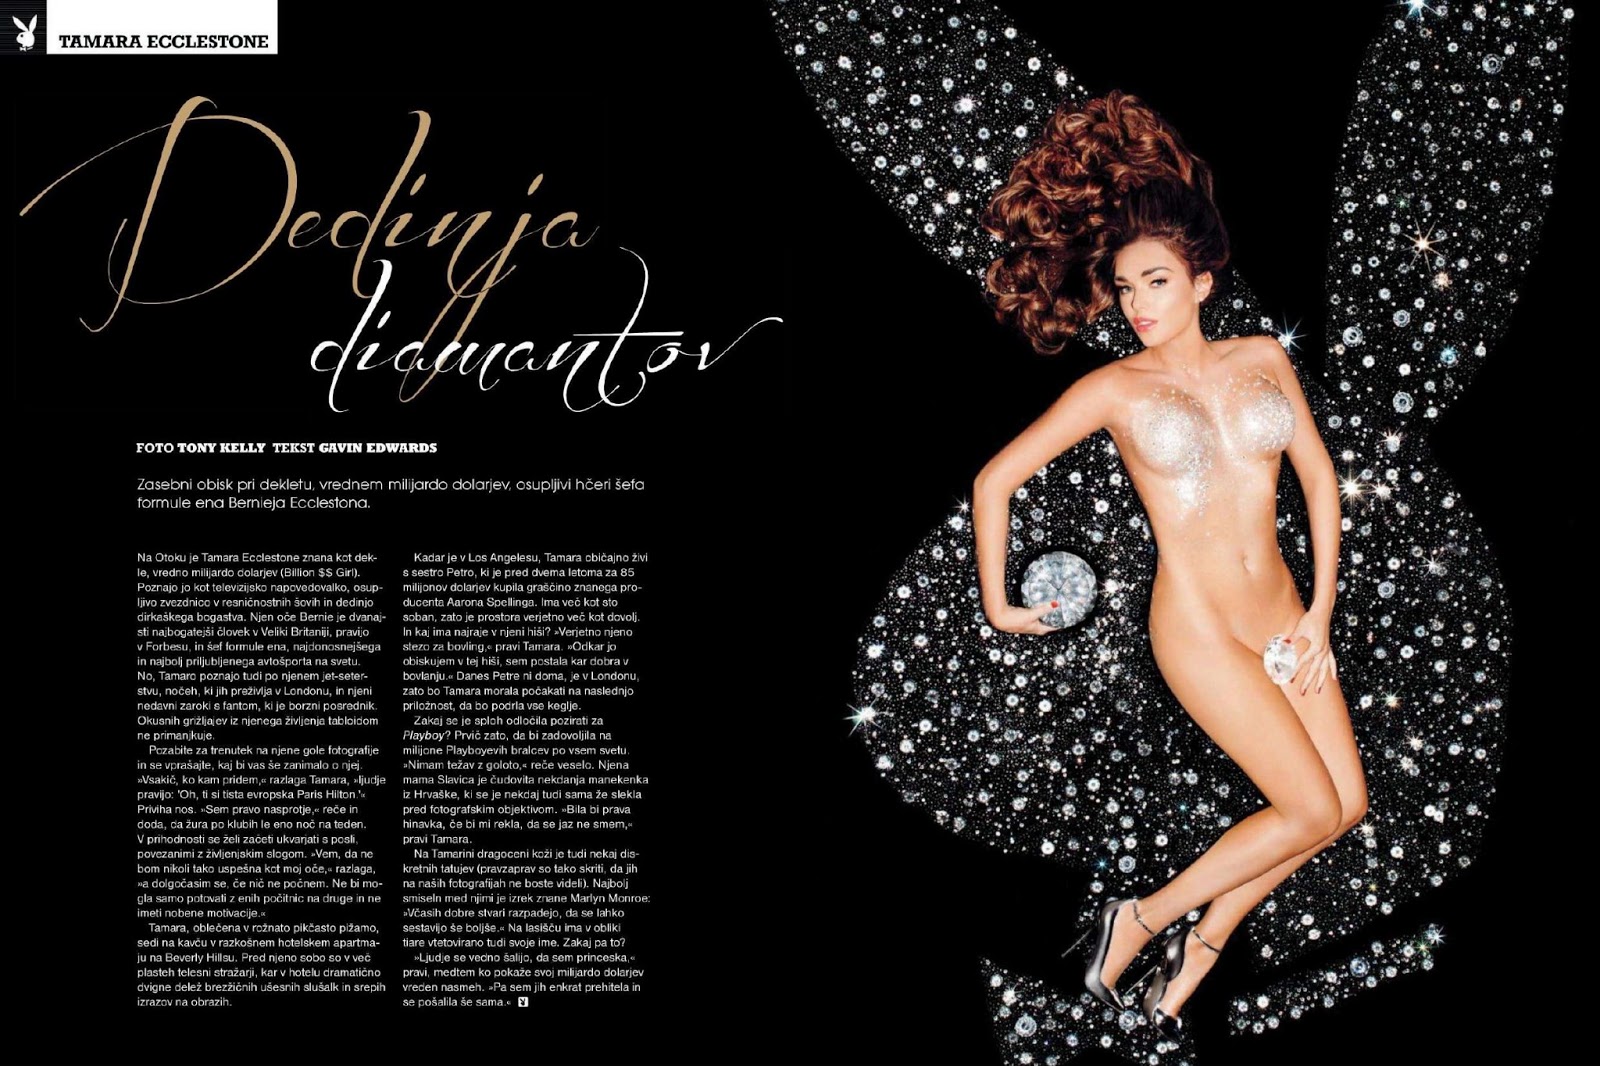 Photos of Tamara Ecclestone at Playboy Slovenia June 2013 issue. 